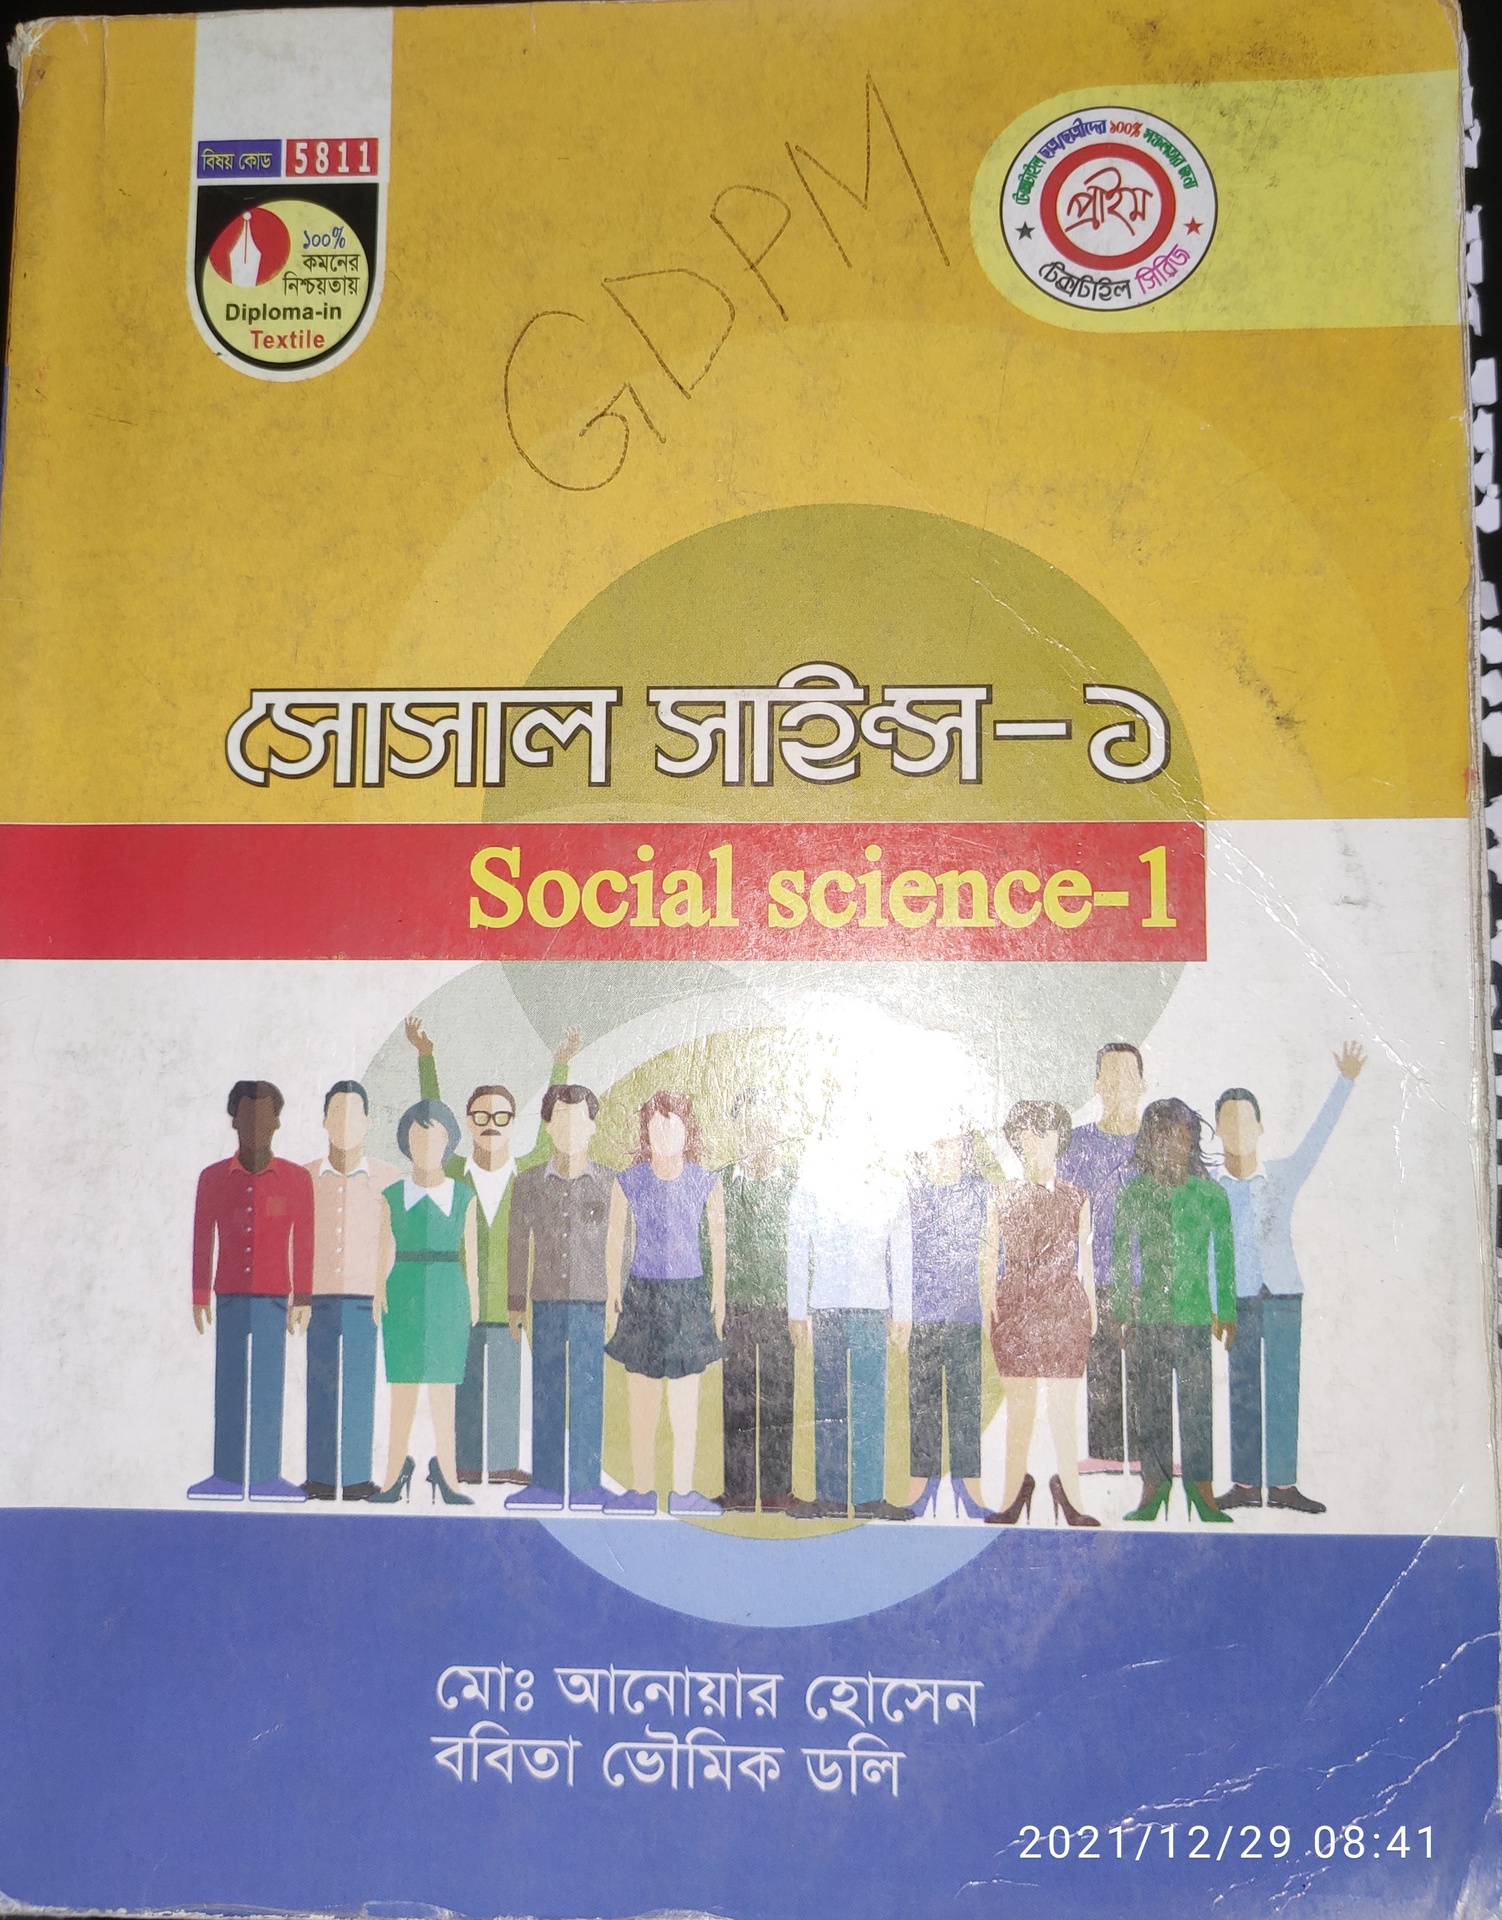 Social Science - 1  (5811)